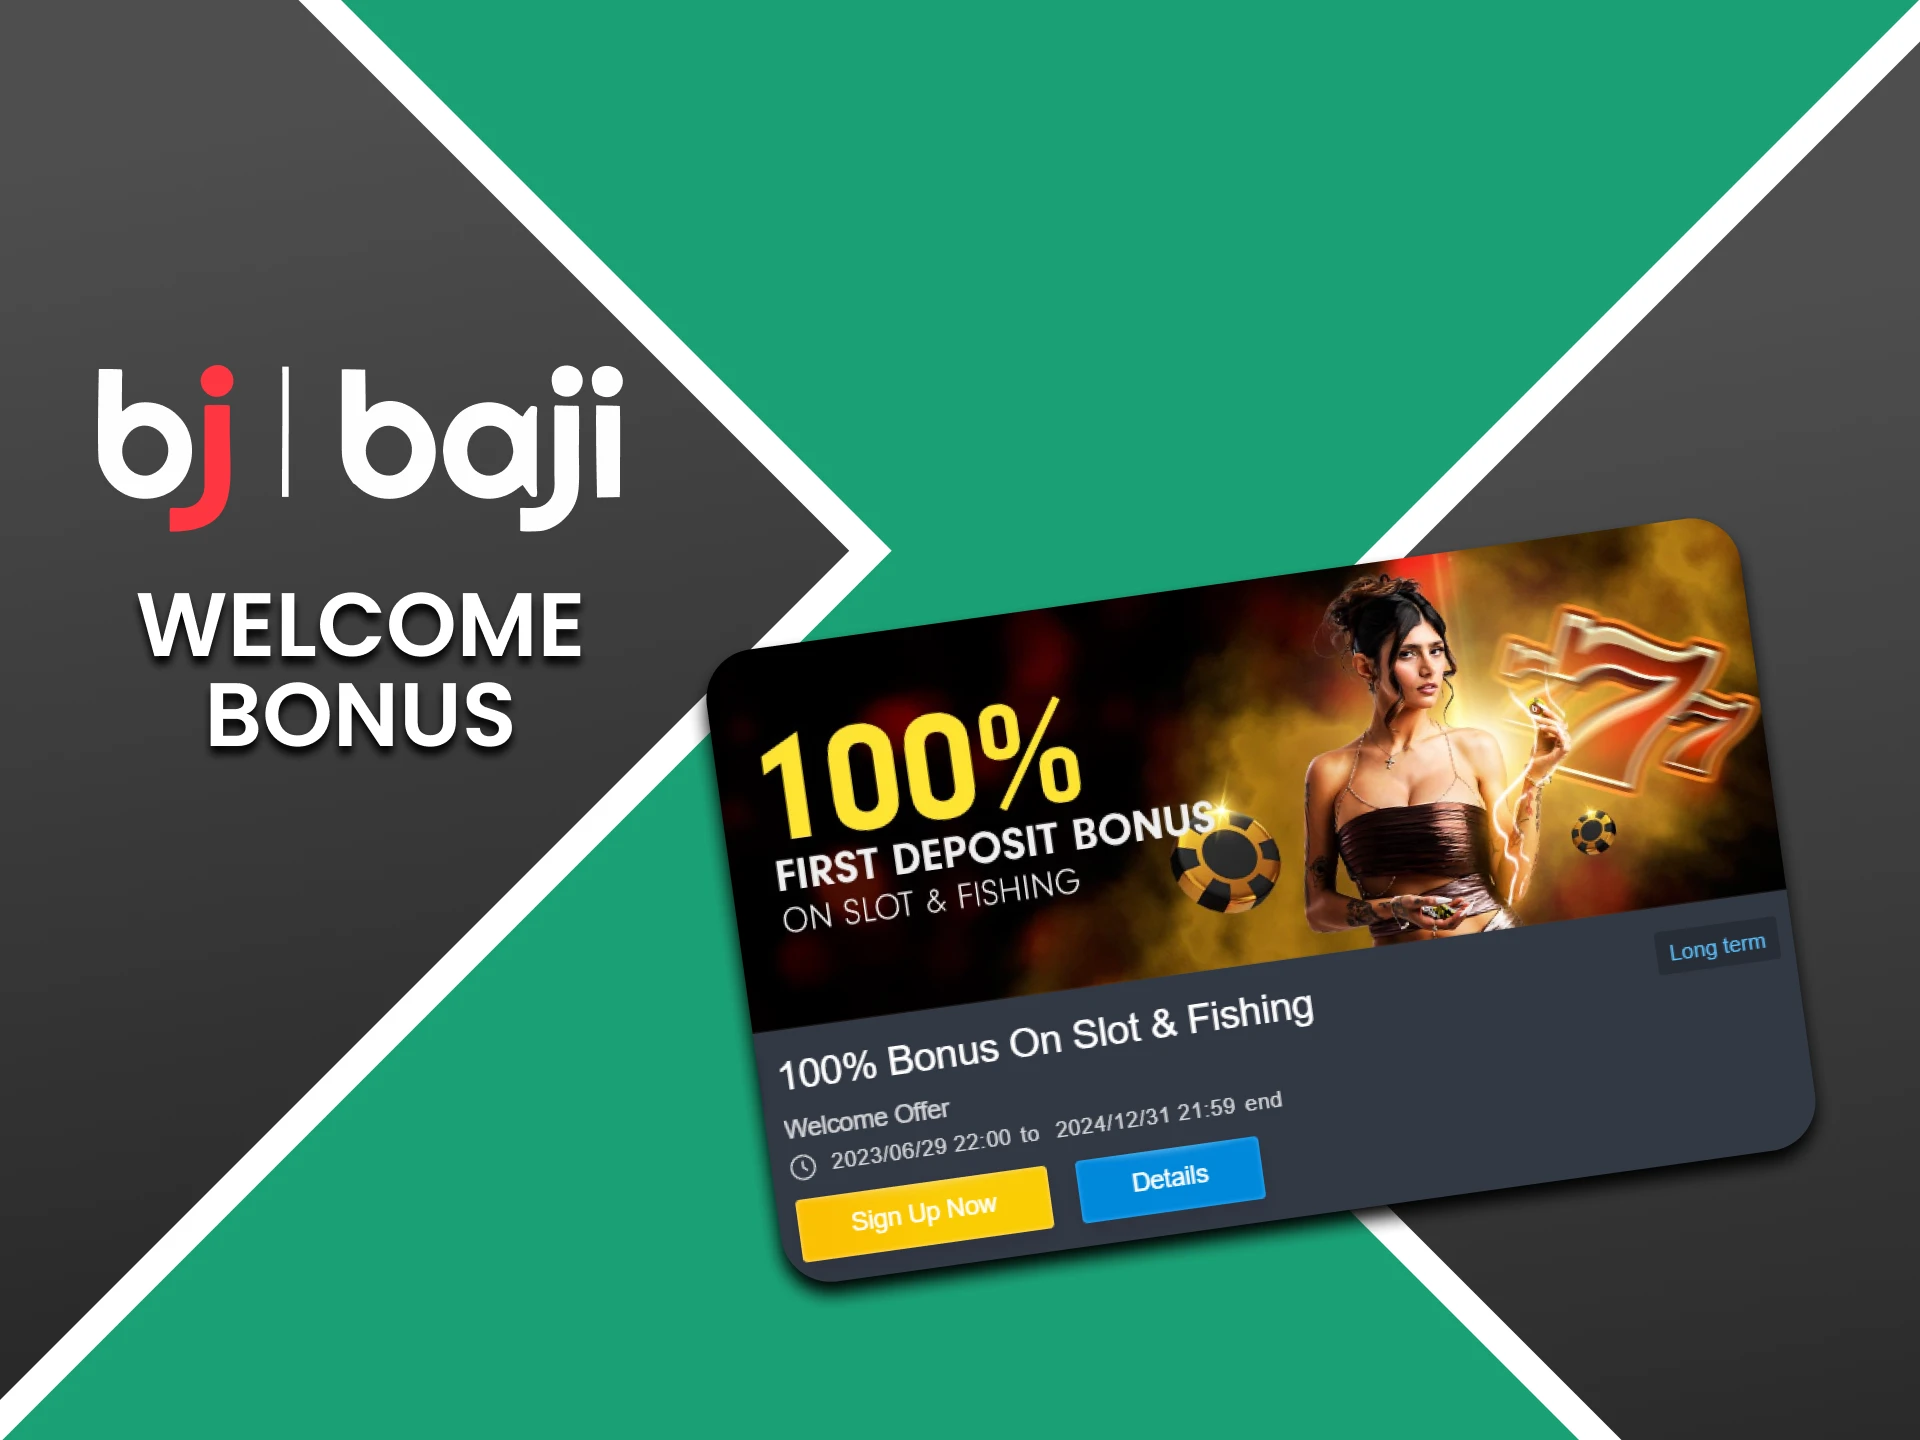 Baji gives bonuses for playing slots.